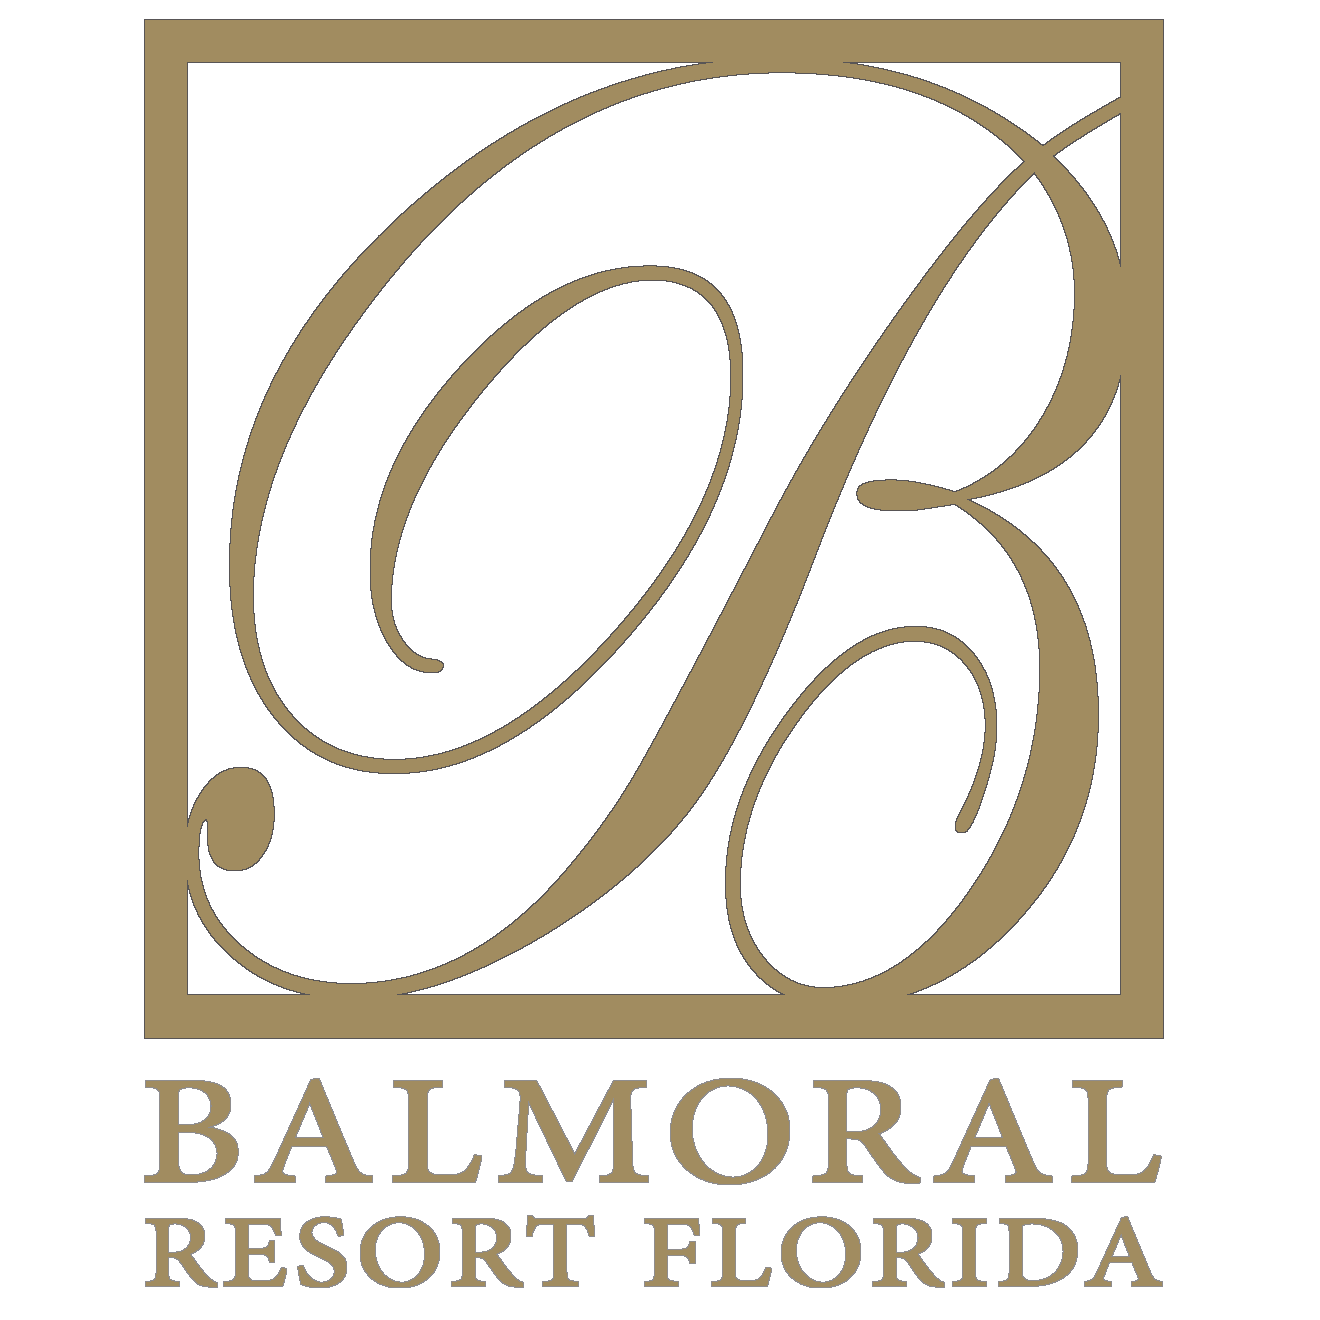 Balmoral Resort Florida case study